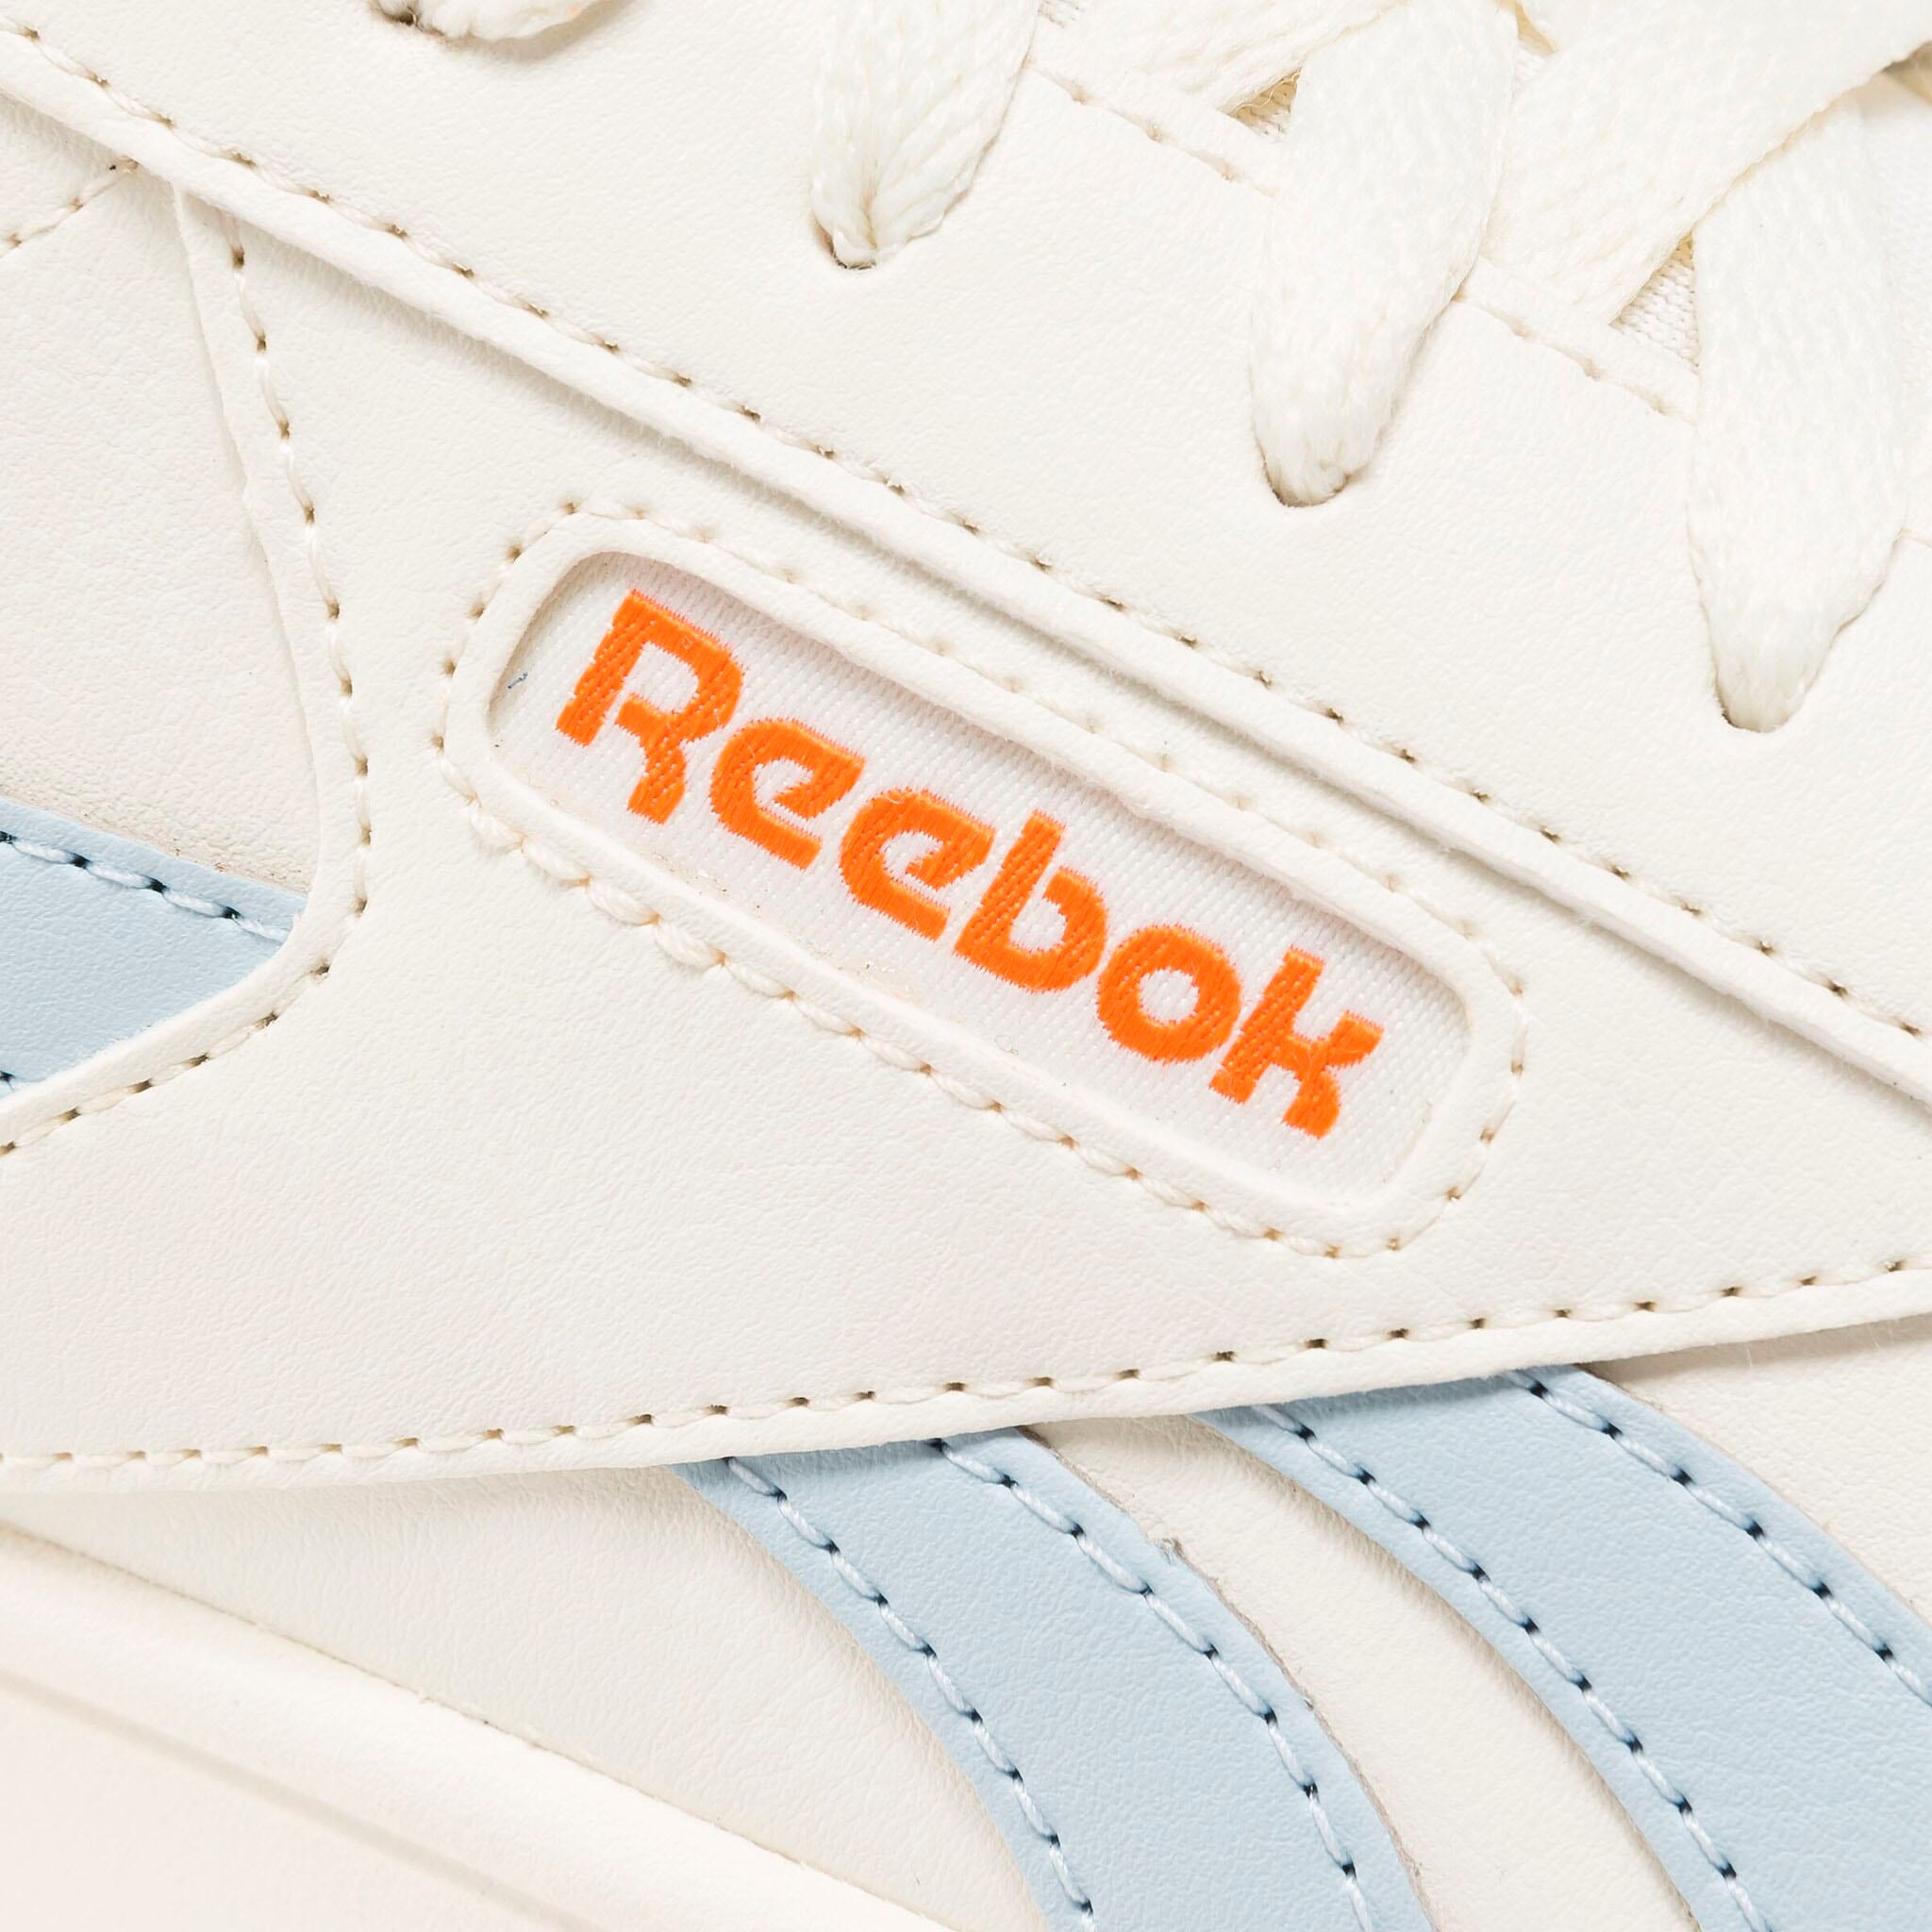 Reebok Classic Sneaker »REEBOK COURT RETRO«